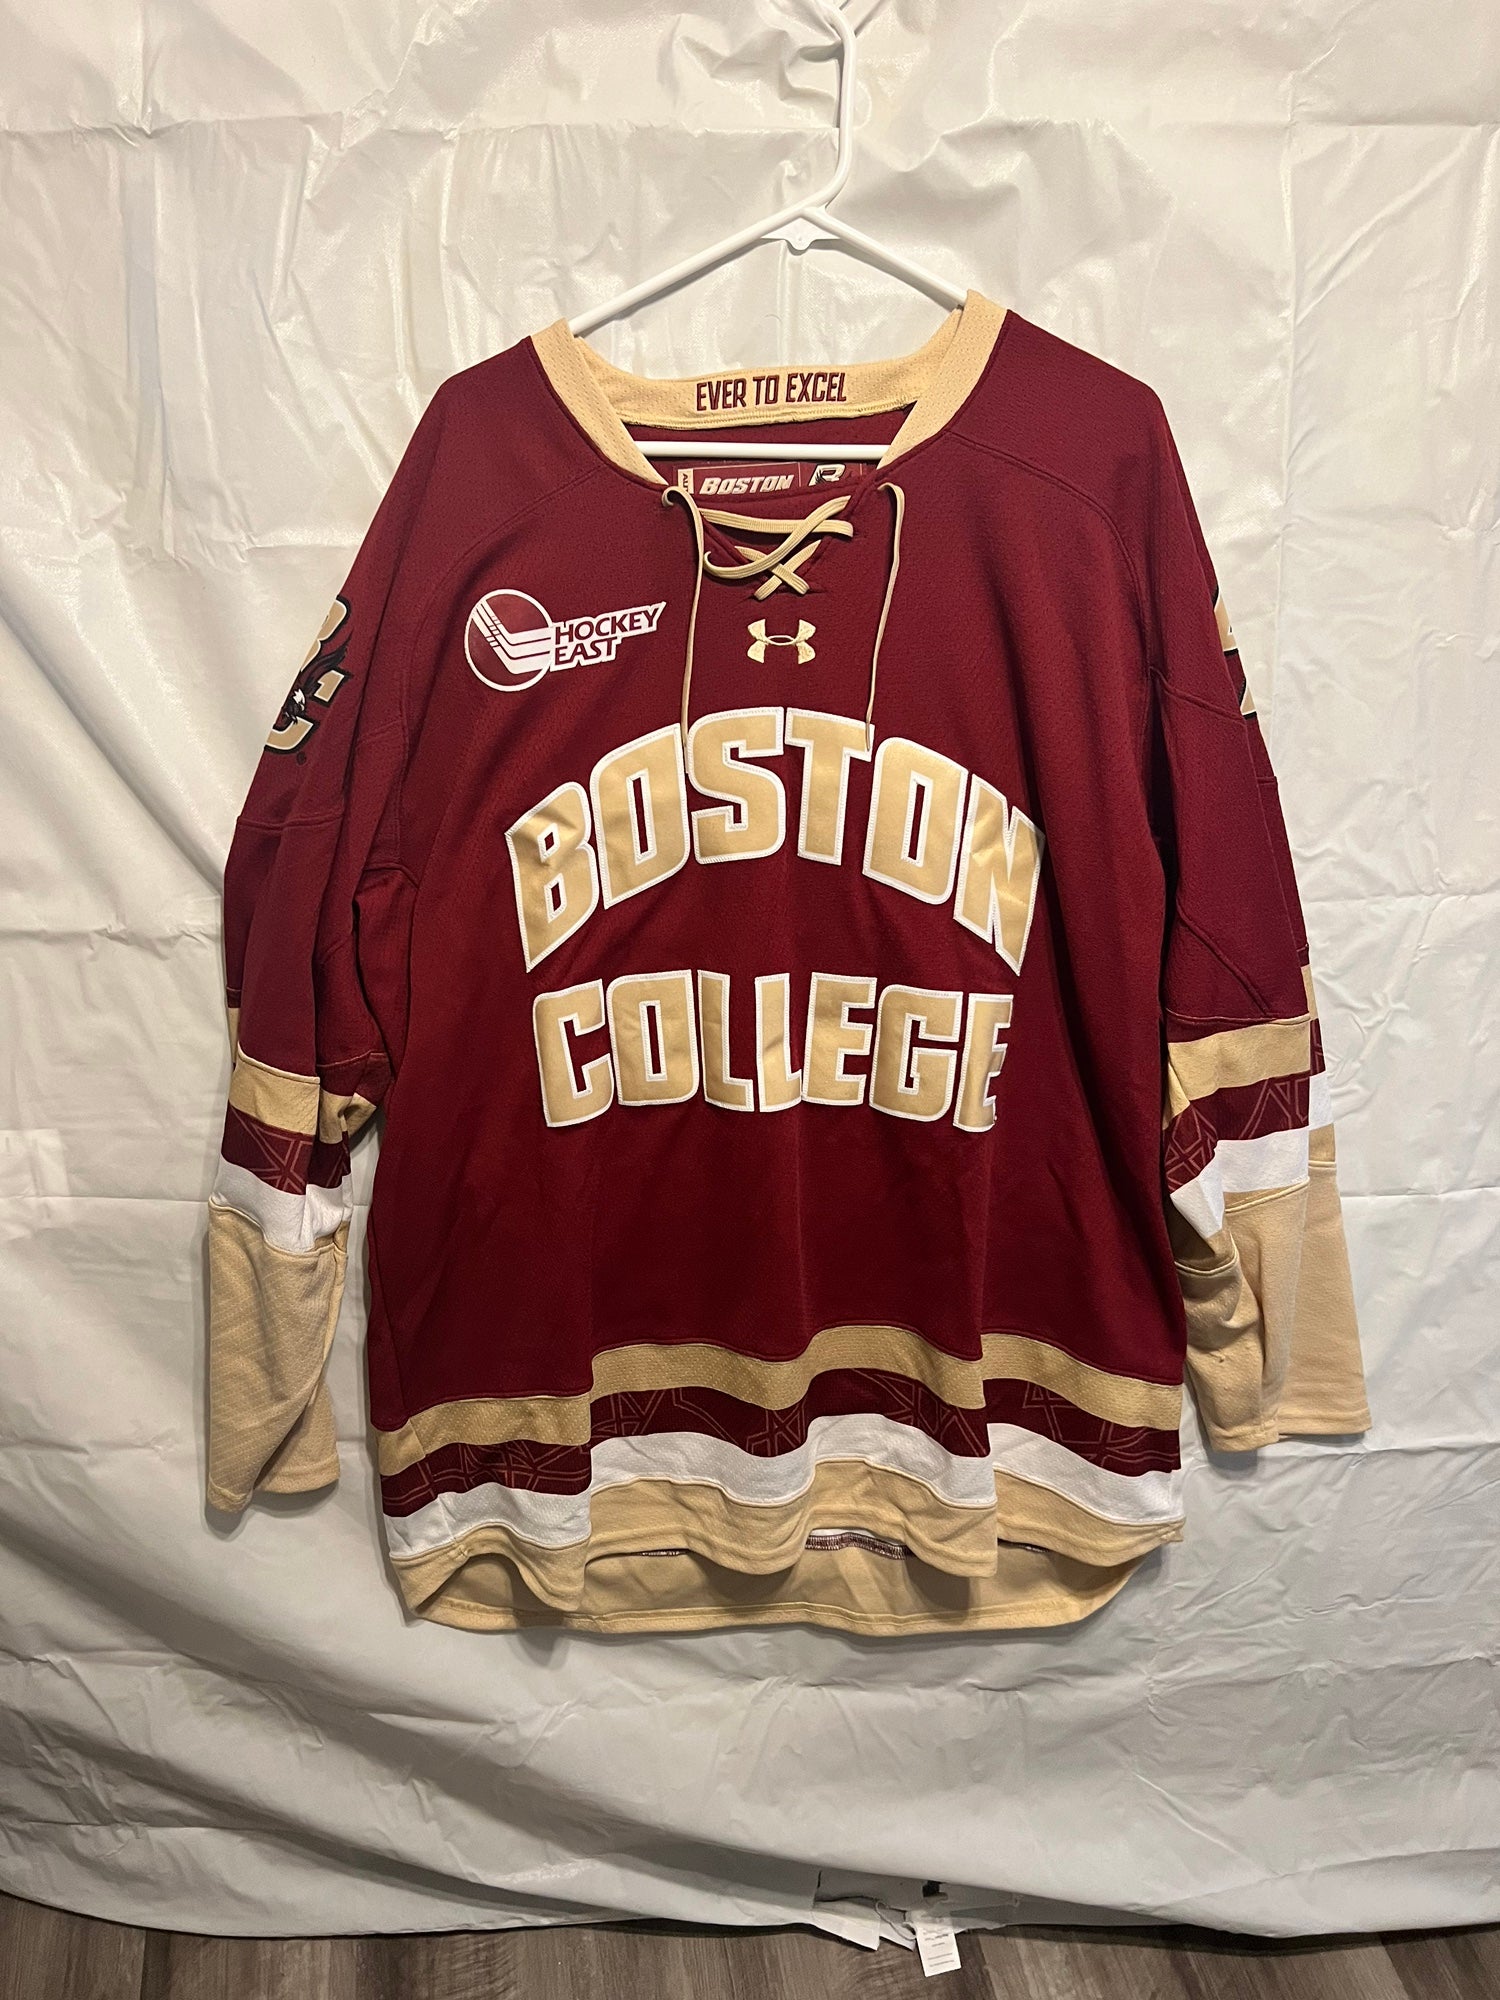 Boston College Hockey Jersey